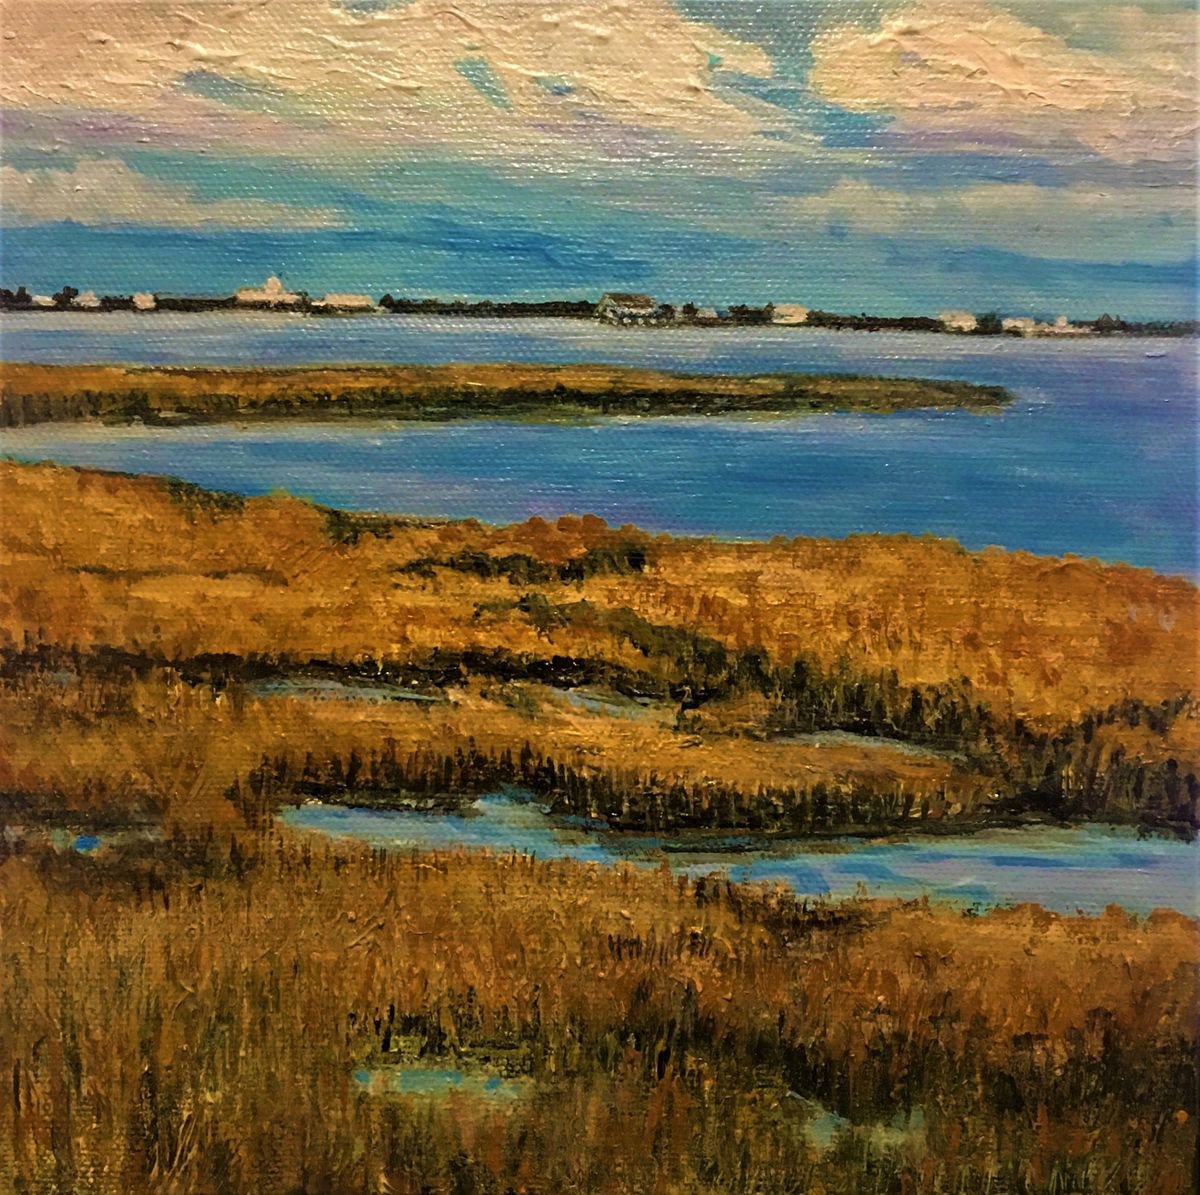 Tidal Marsh Near St Michael’s on the Chesapeak Bay by Nancy Brockmon